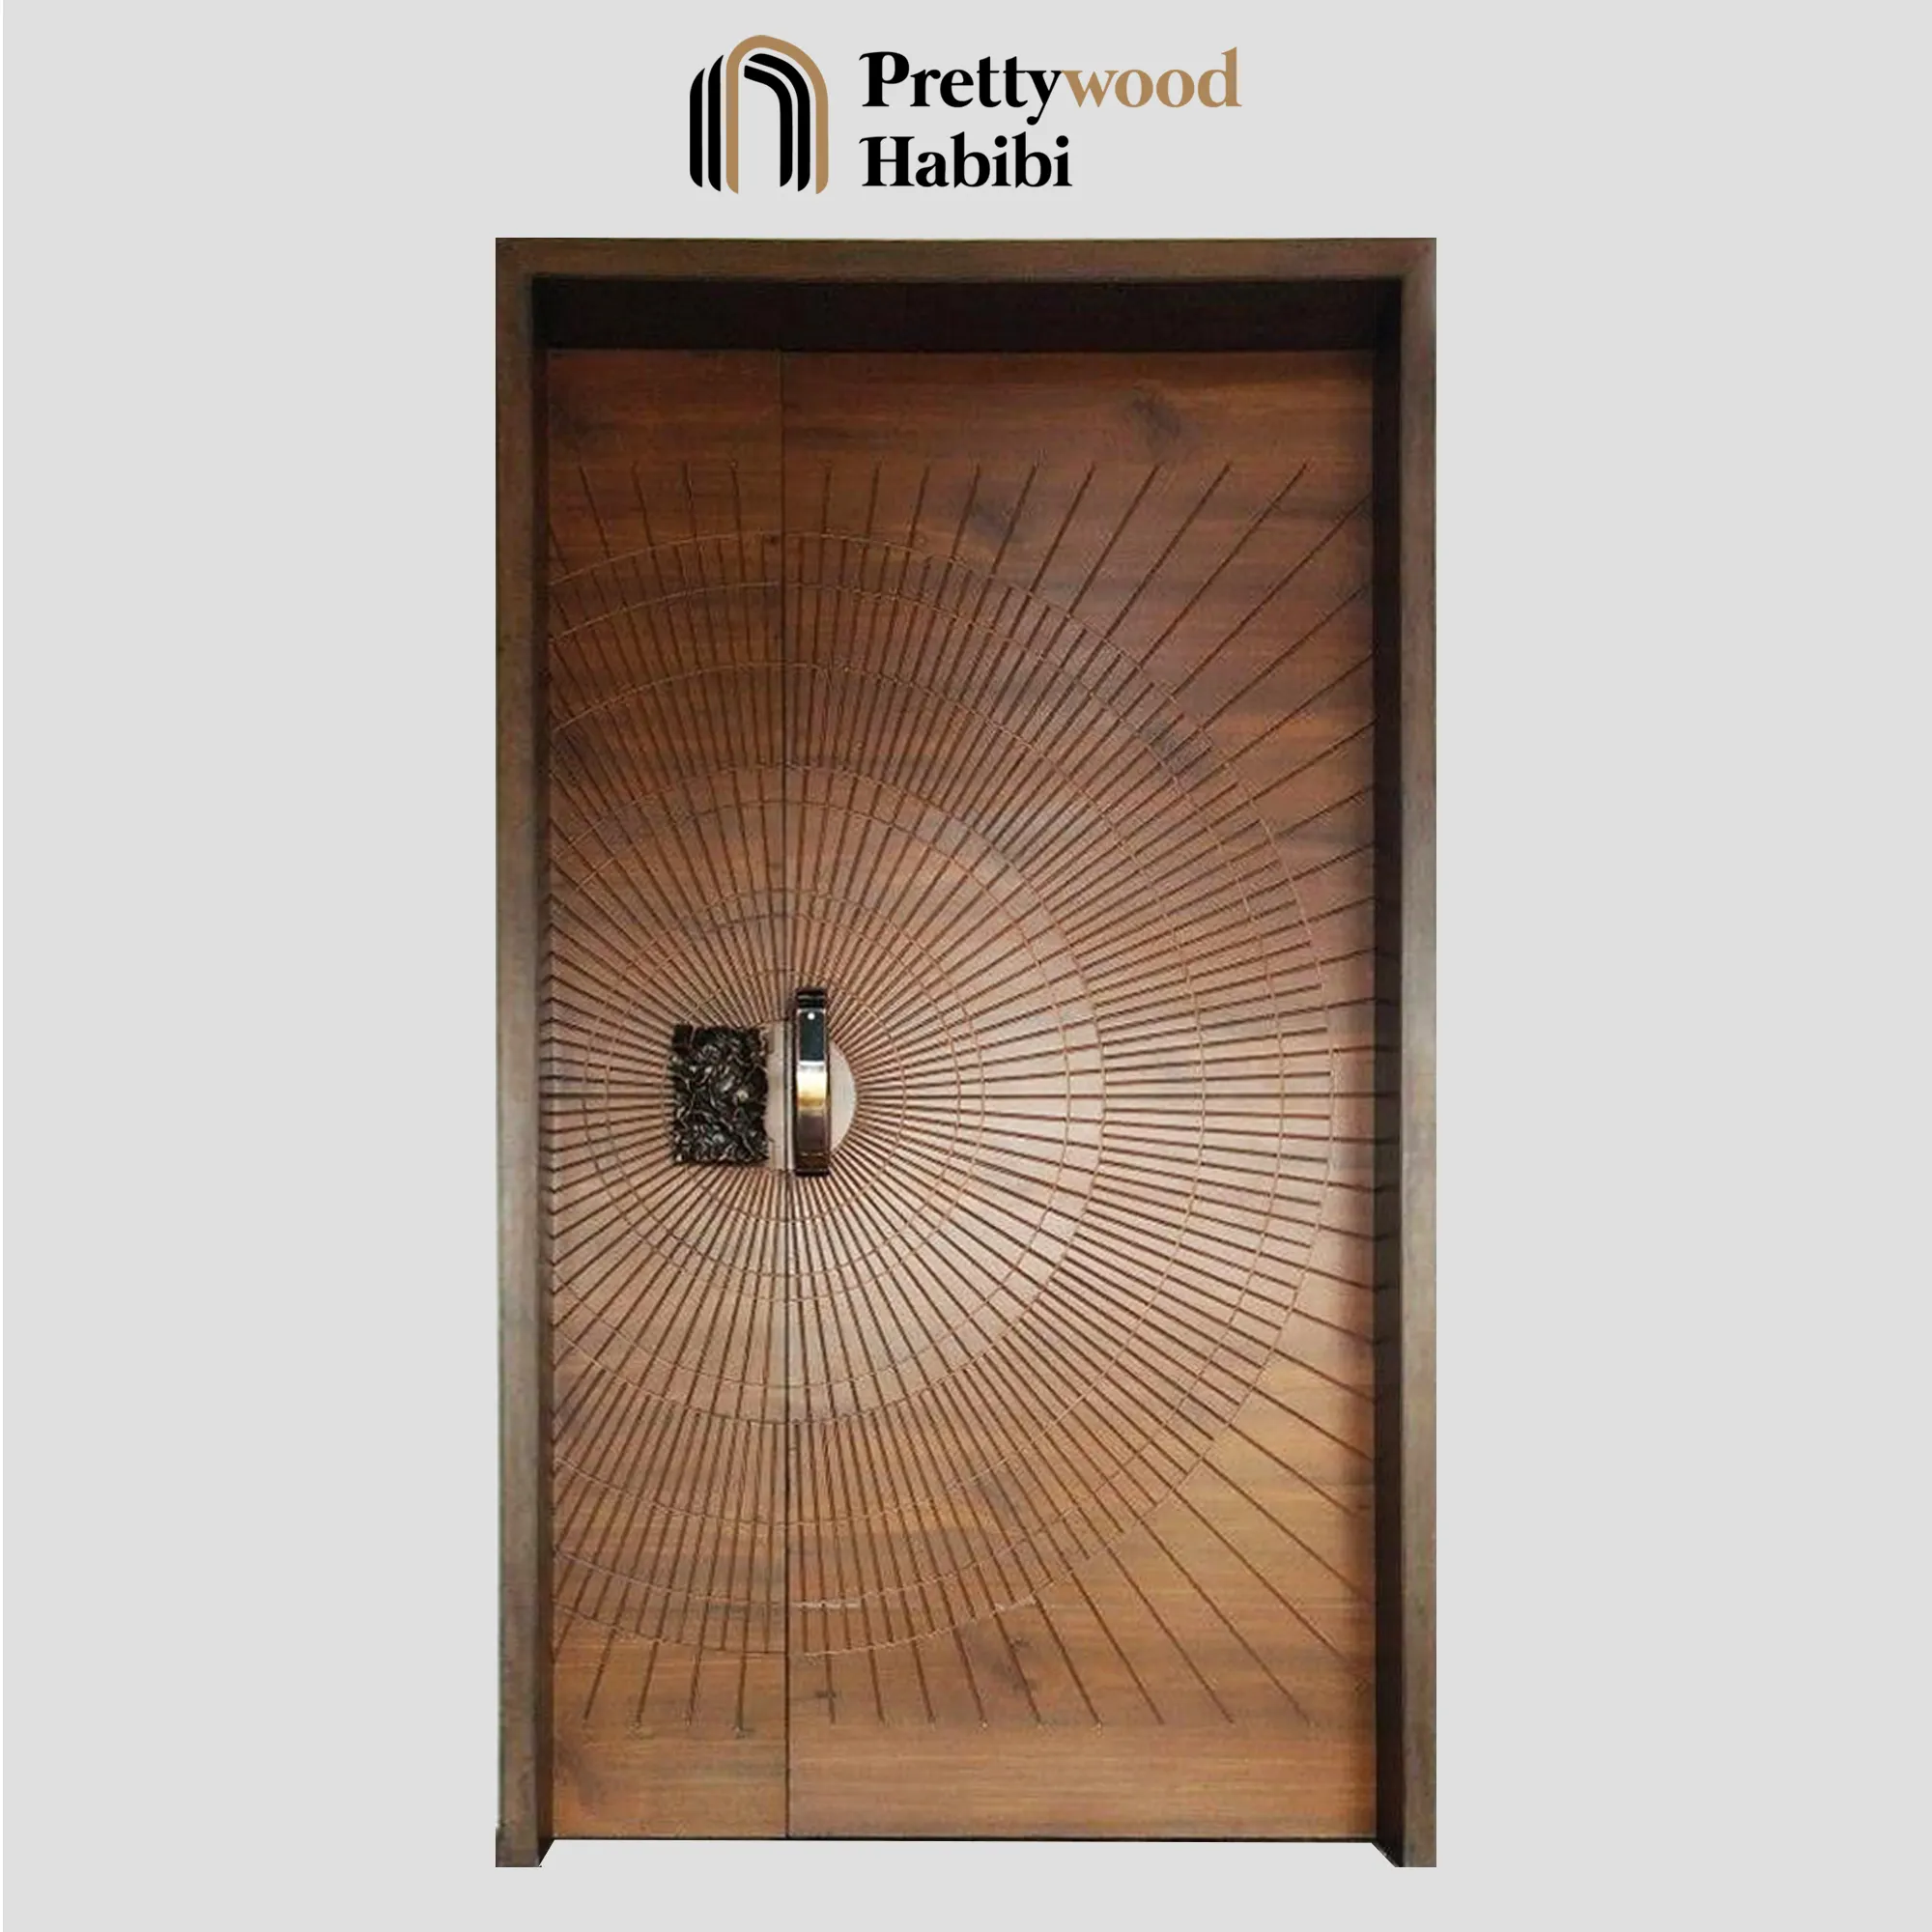 Prettywood מודרני גיאומטריה מעגל עיצוב אמריקאי אגוז אחד וחצי חיצוני קדמי כניסת דלת עבור בית